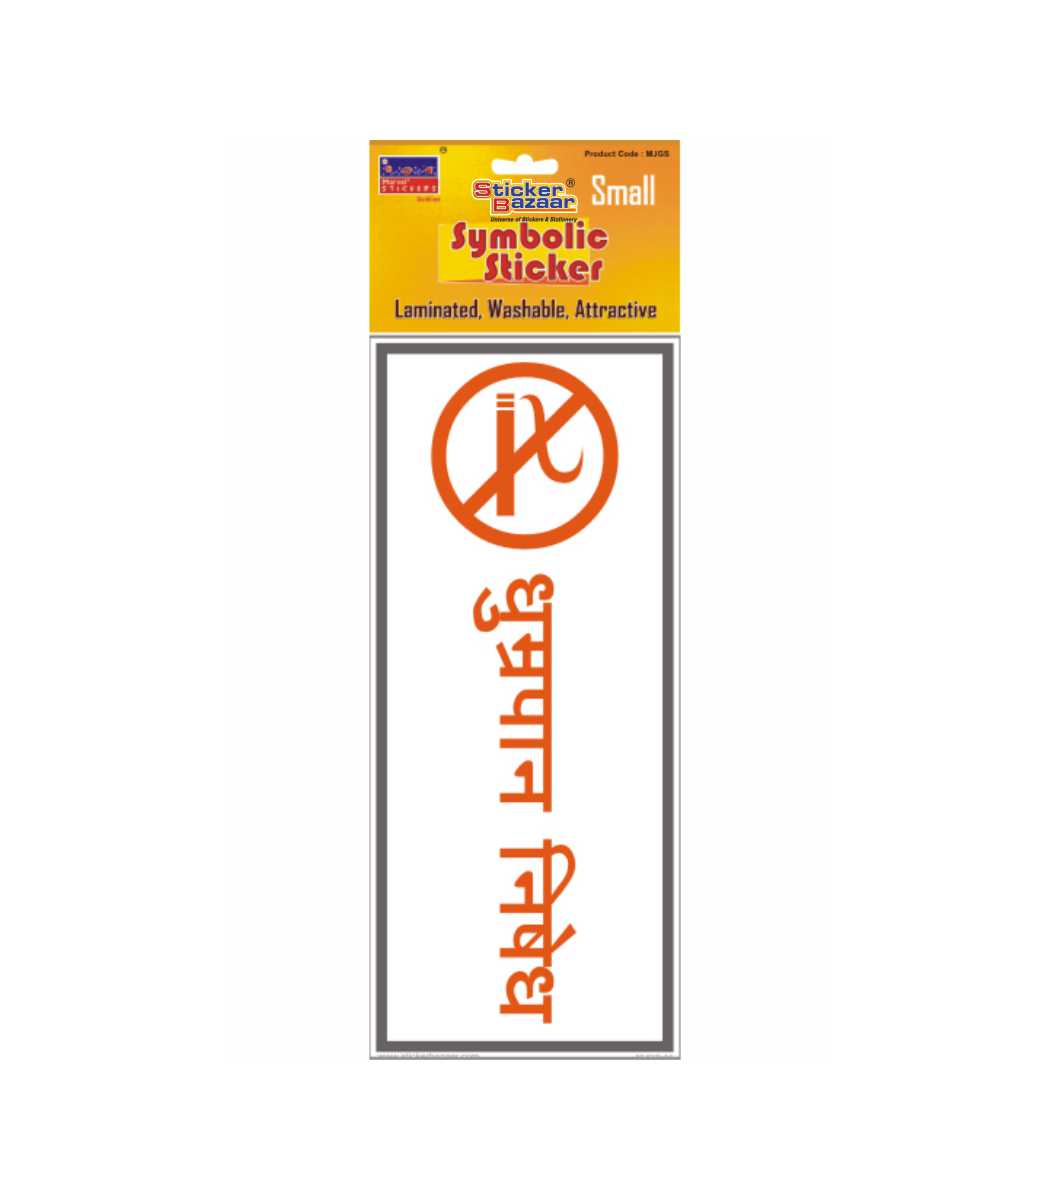 No Smoking in Hindi Small Symbolic Sticker